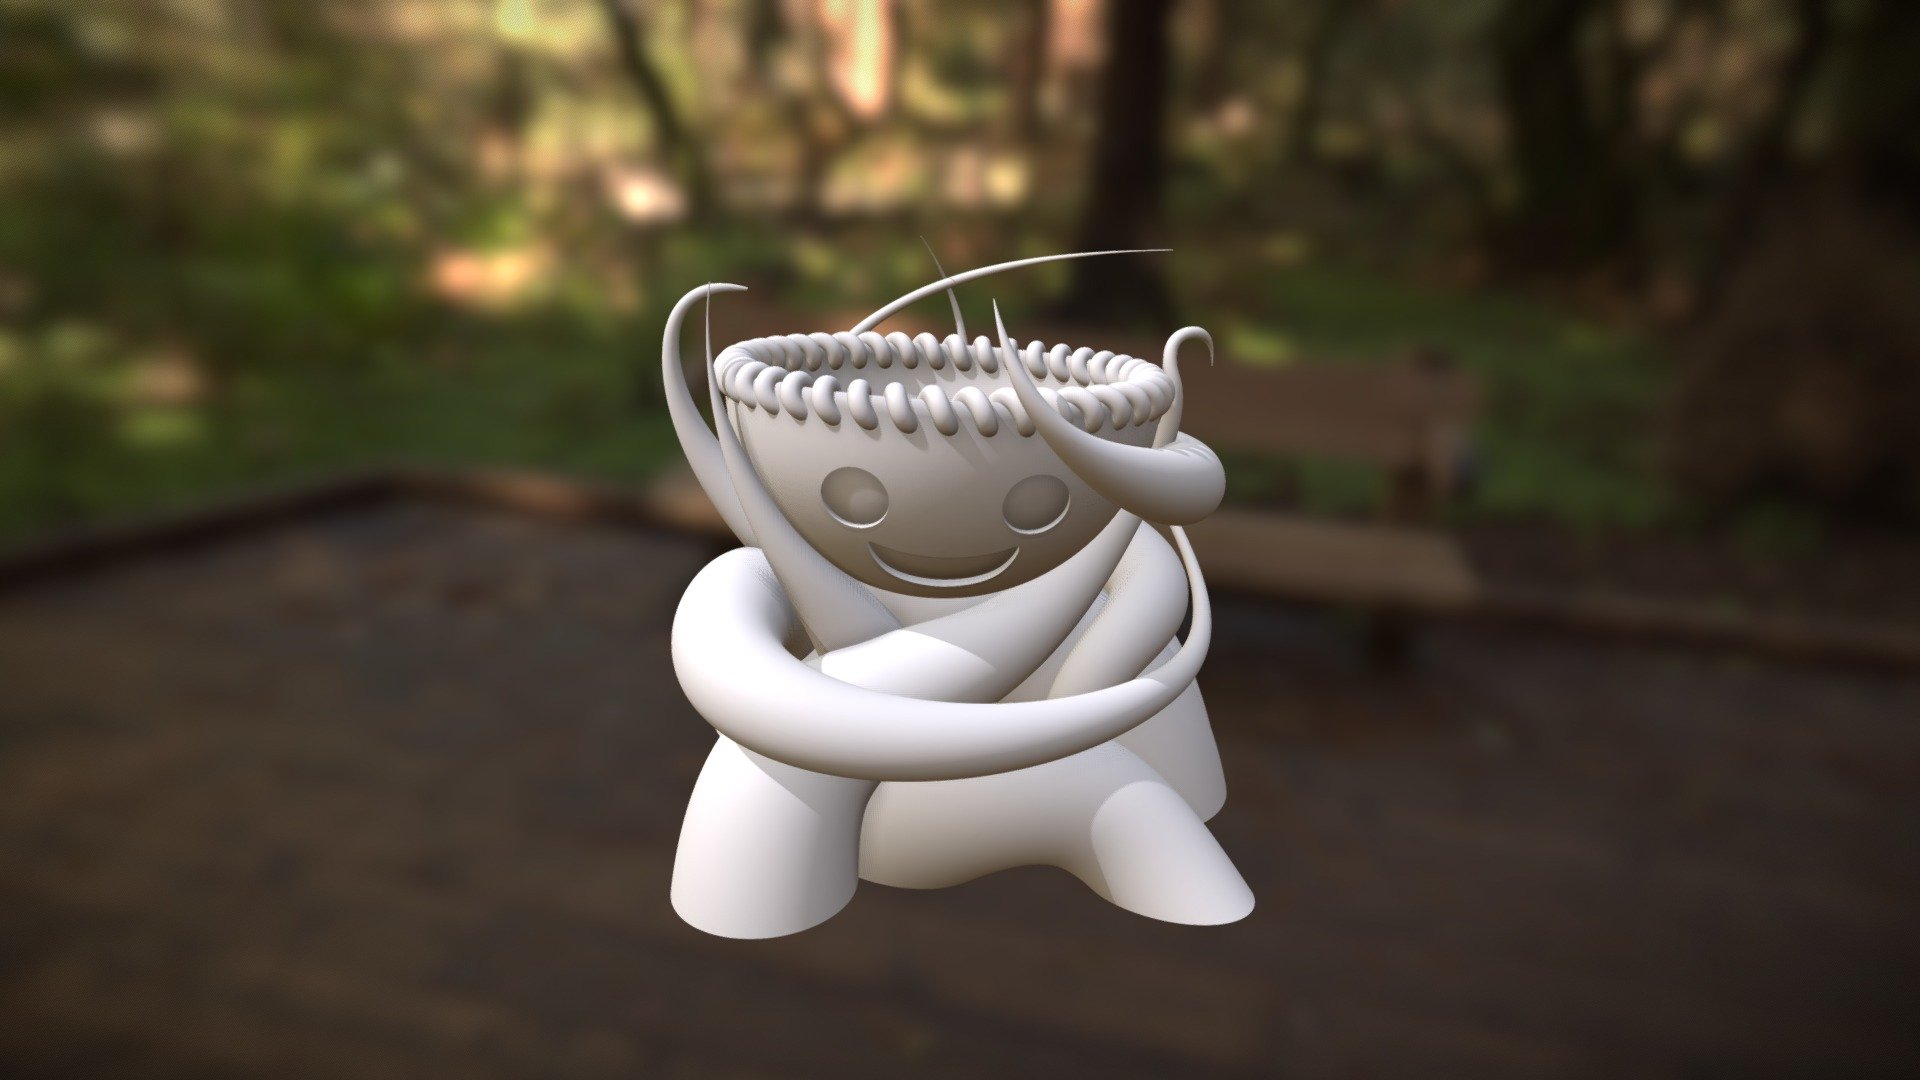 flower pot for 3D print - flower pot 3D print - 3D model by C.anton 3d model